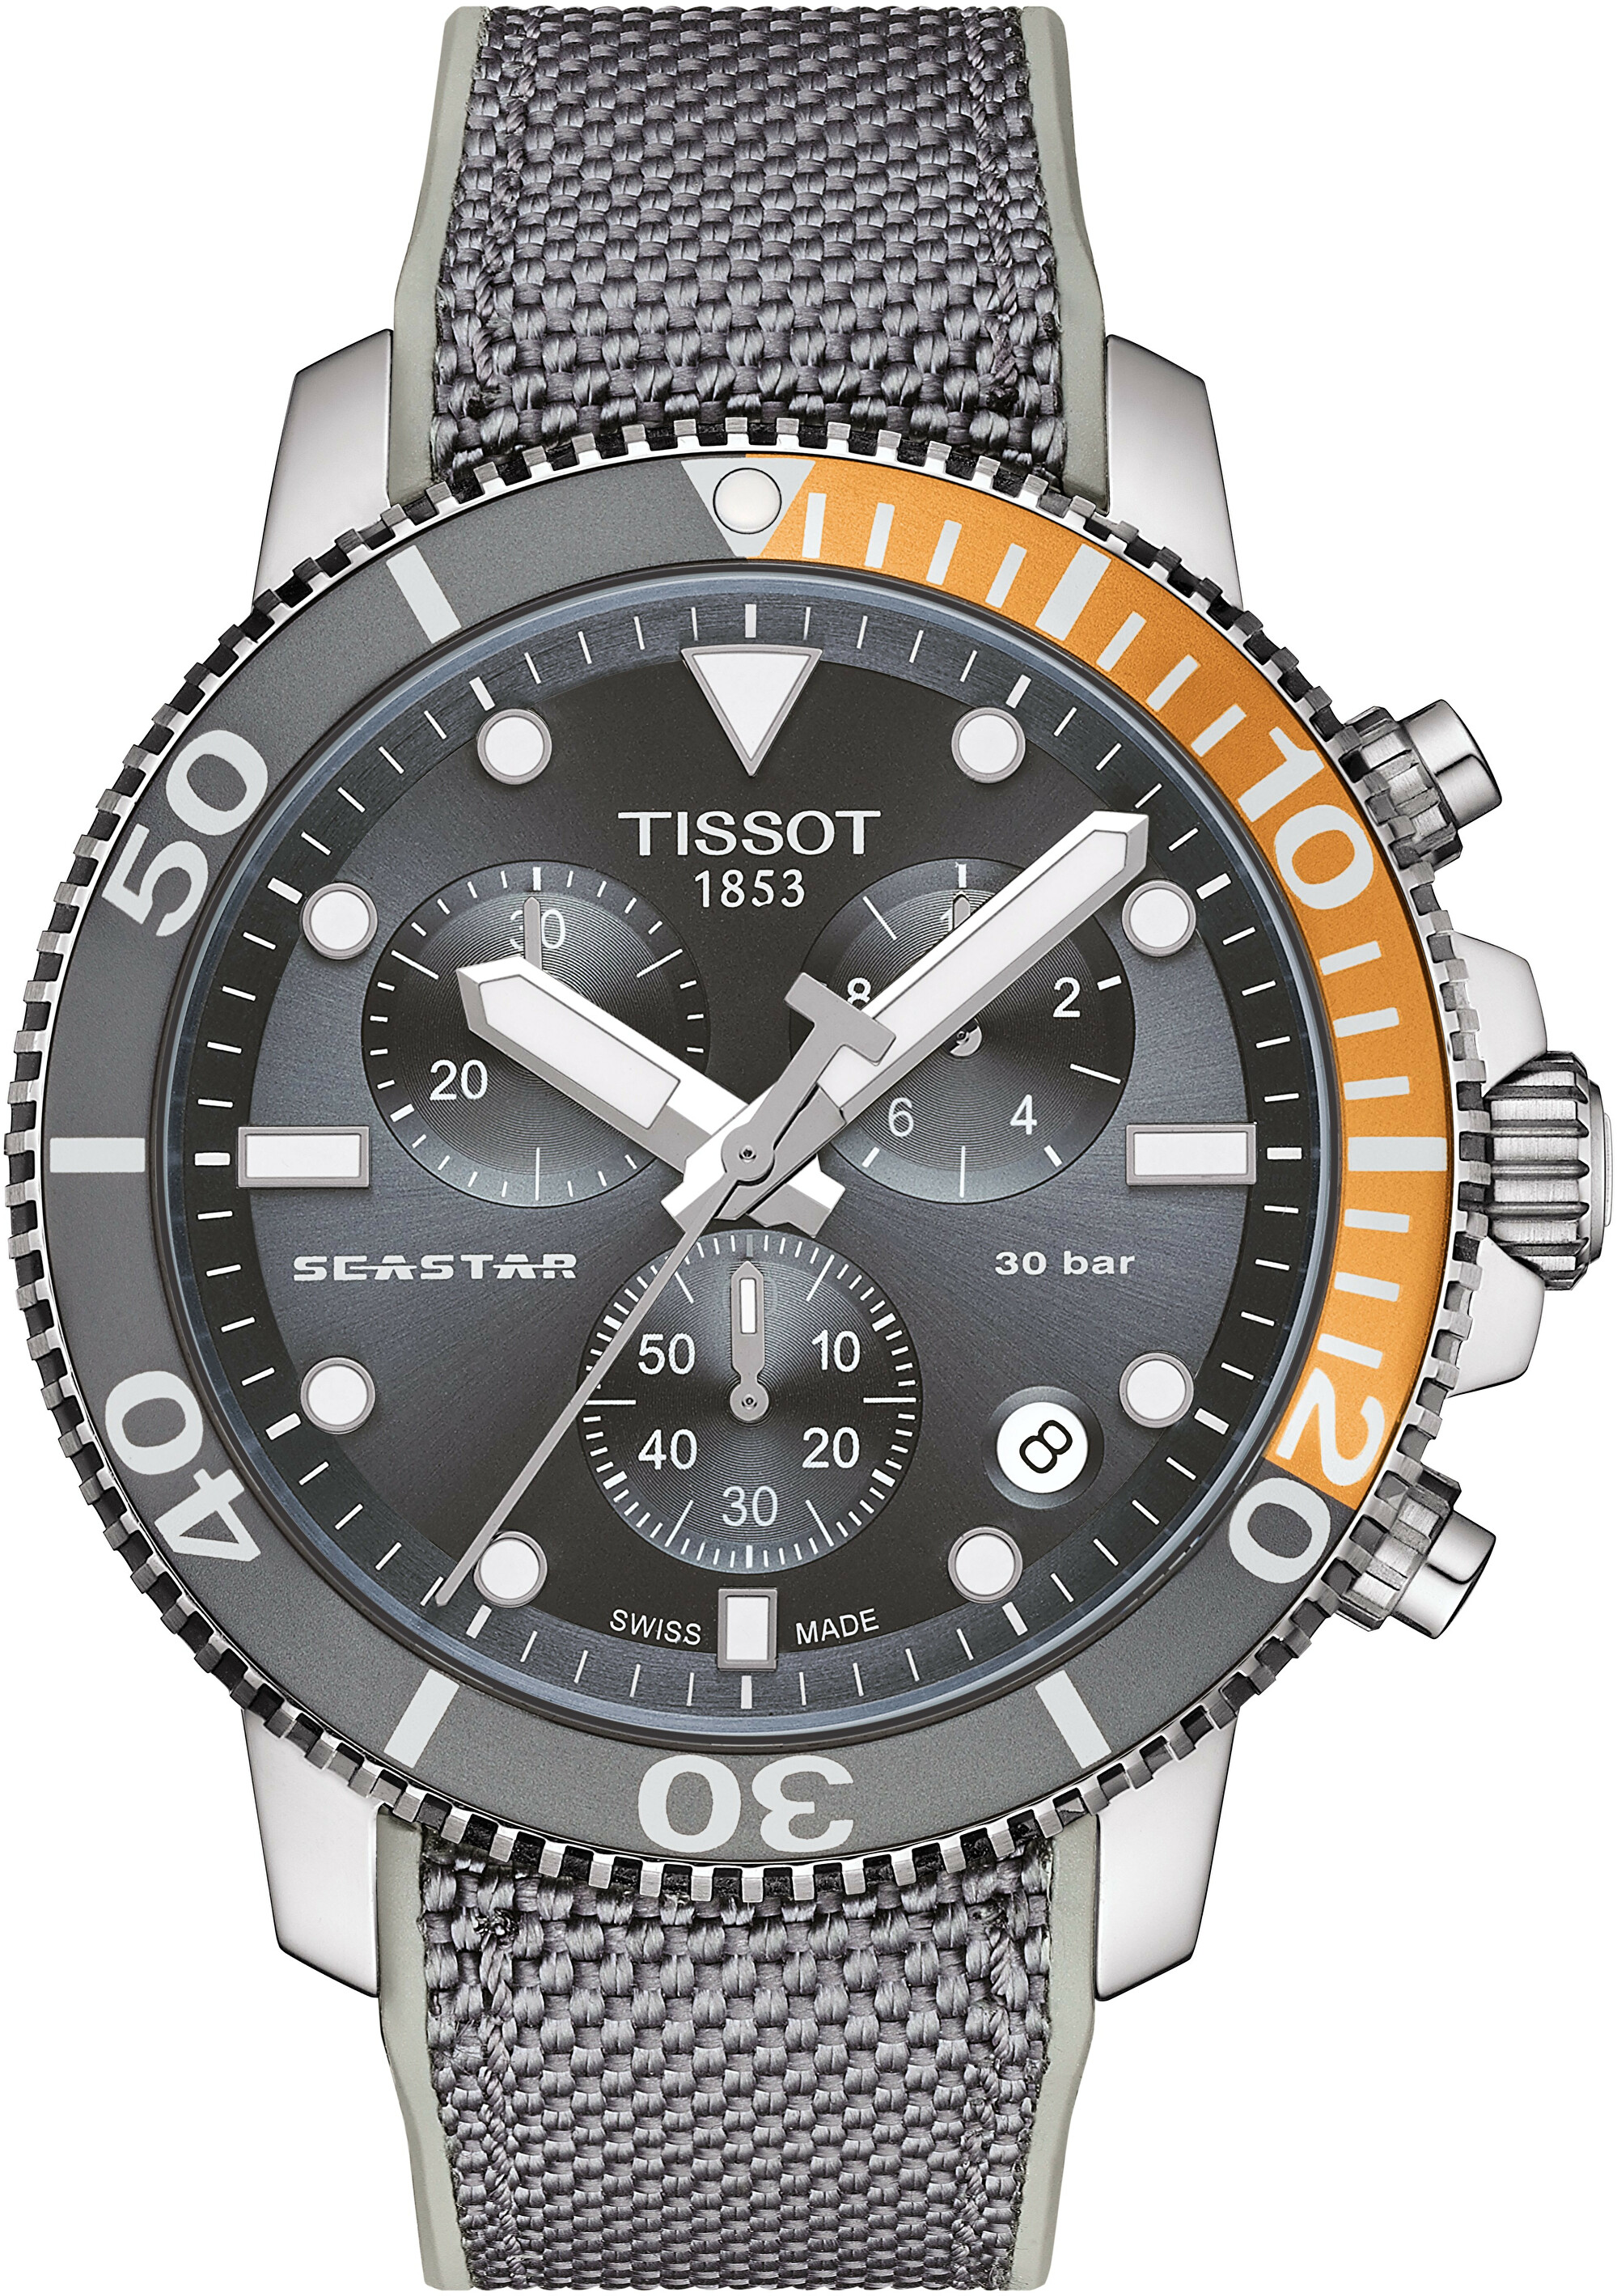 Tissot Seastar 1000 Chronograph T120.417.17.081.01